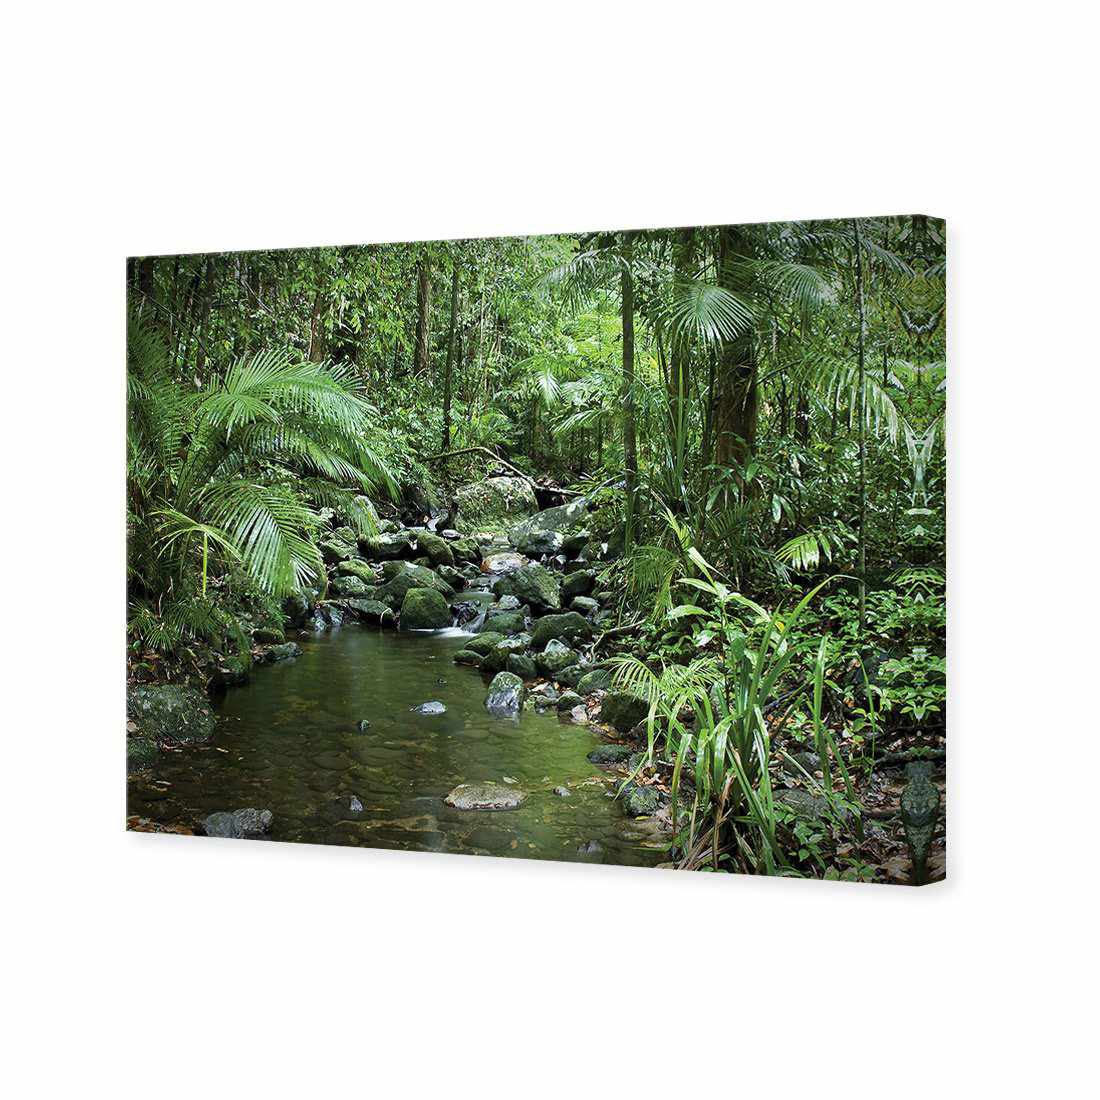 Mossman River In Daintree Rainforest Canvas Art-Canvas-Wall Art Designs-45x30cm-Canvas - No Frame-Wall Art Designs